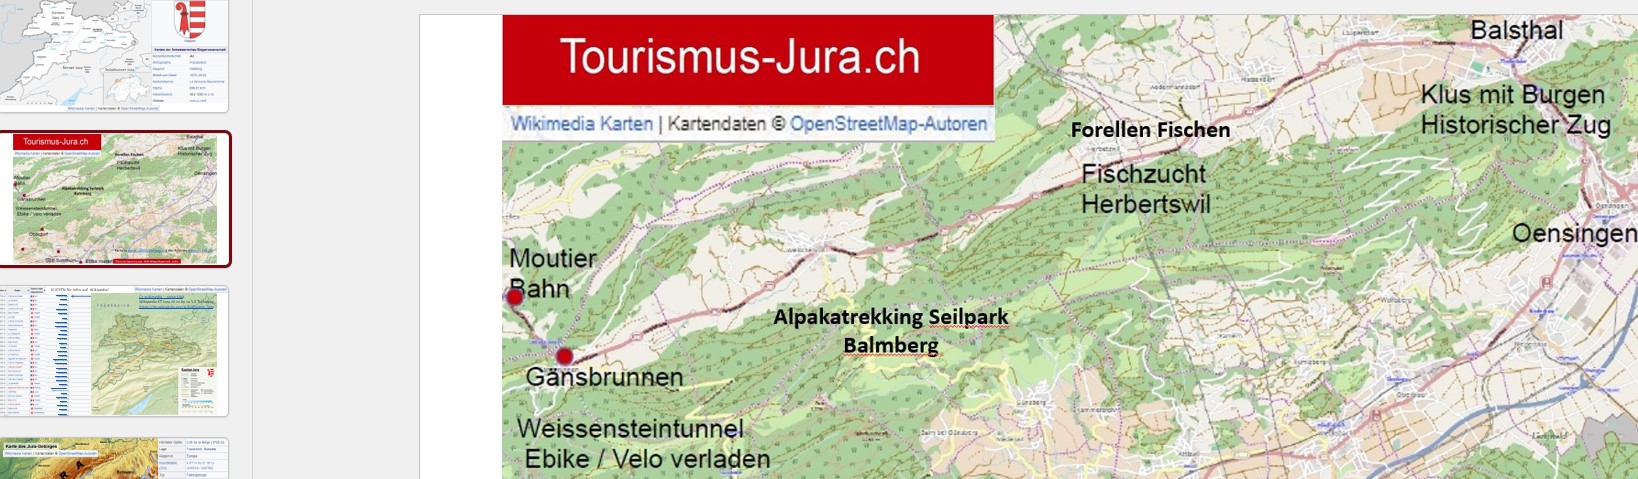 tourismus jura